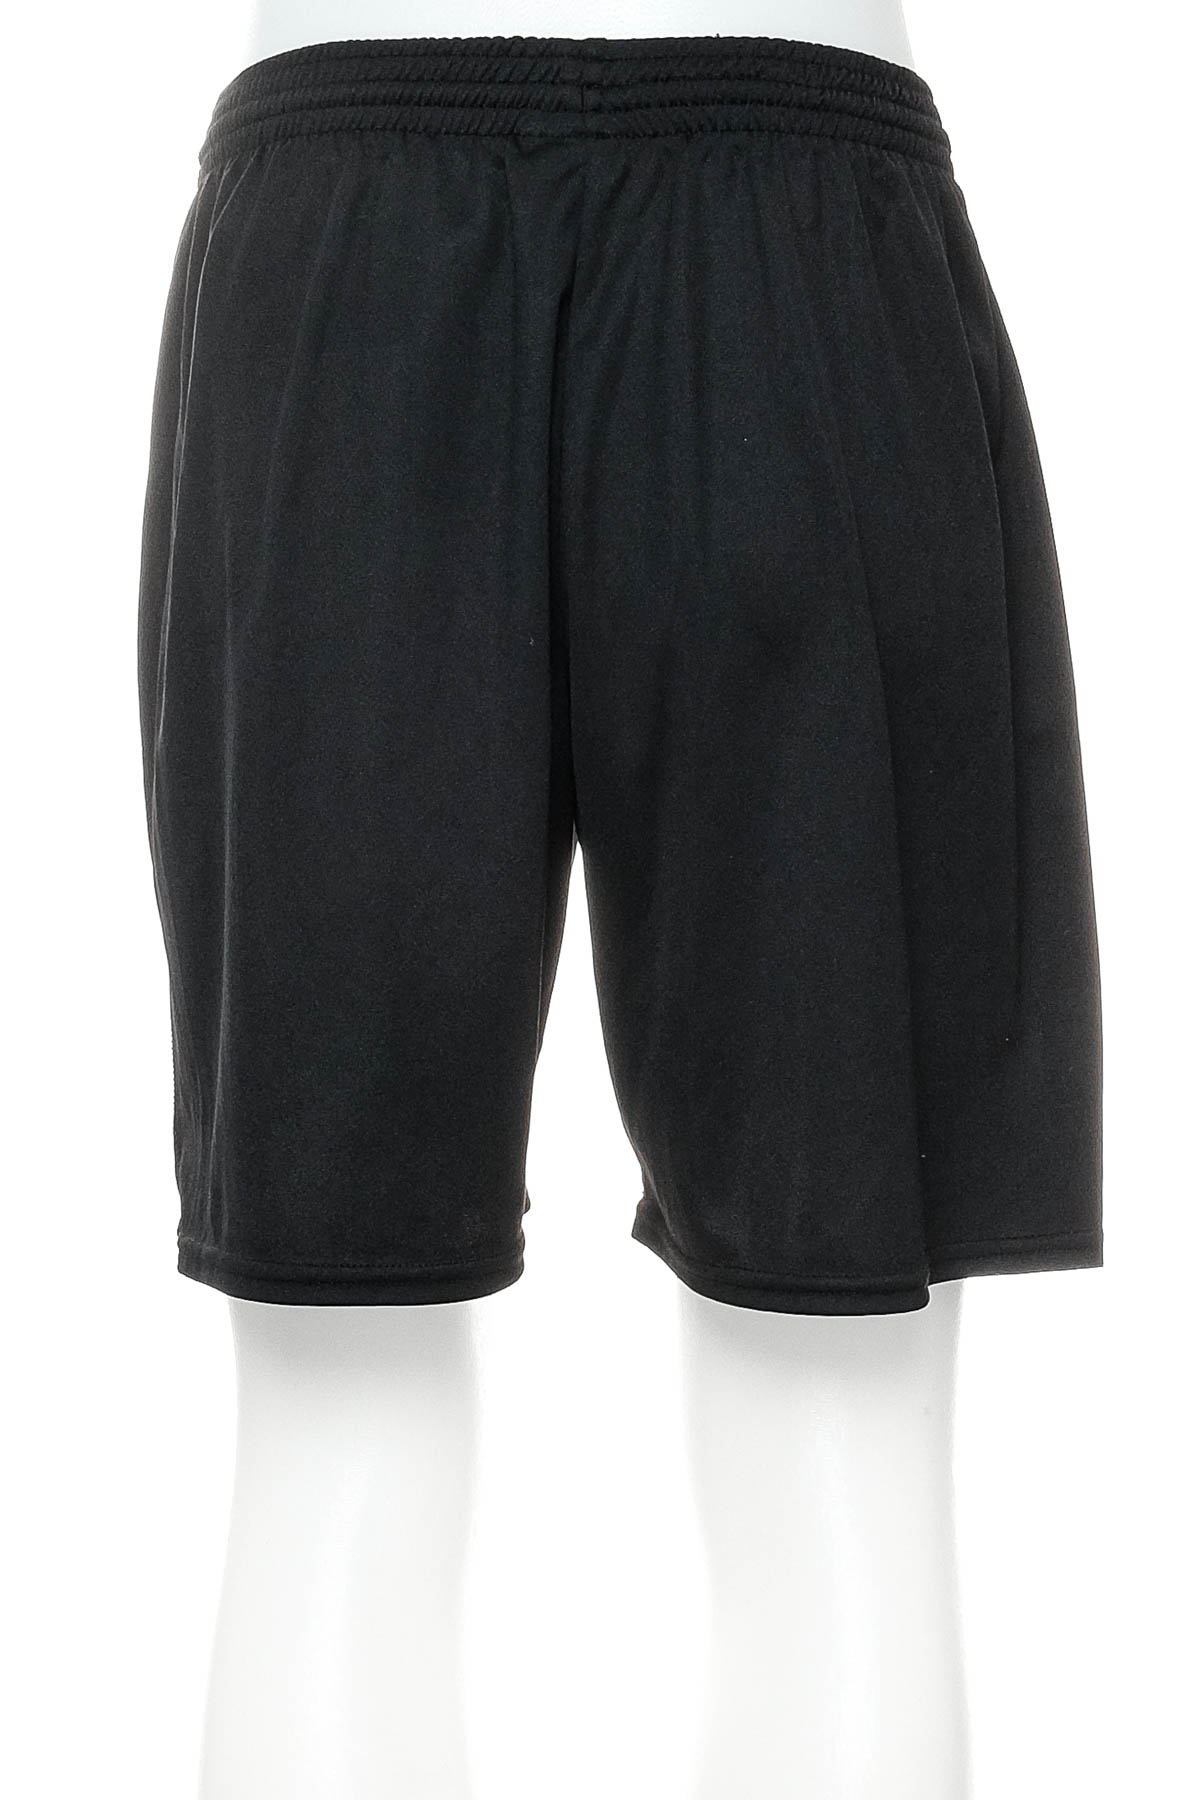 Men's shorts - Kipsta - 1